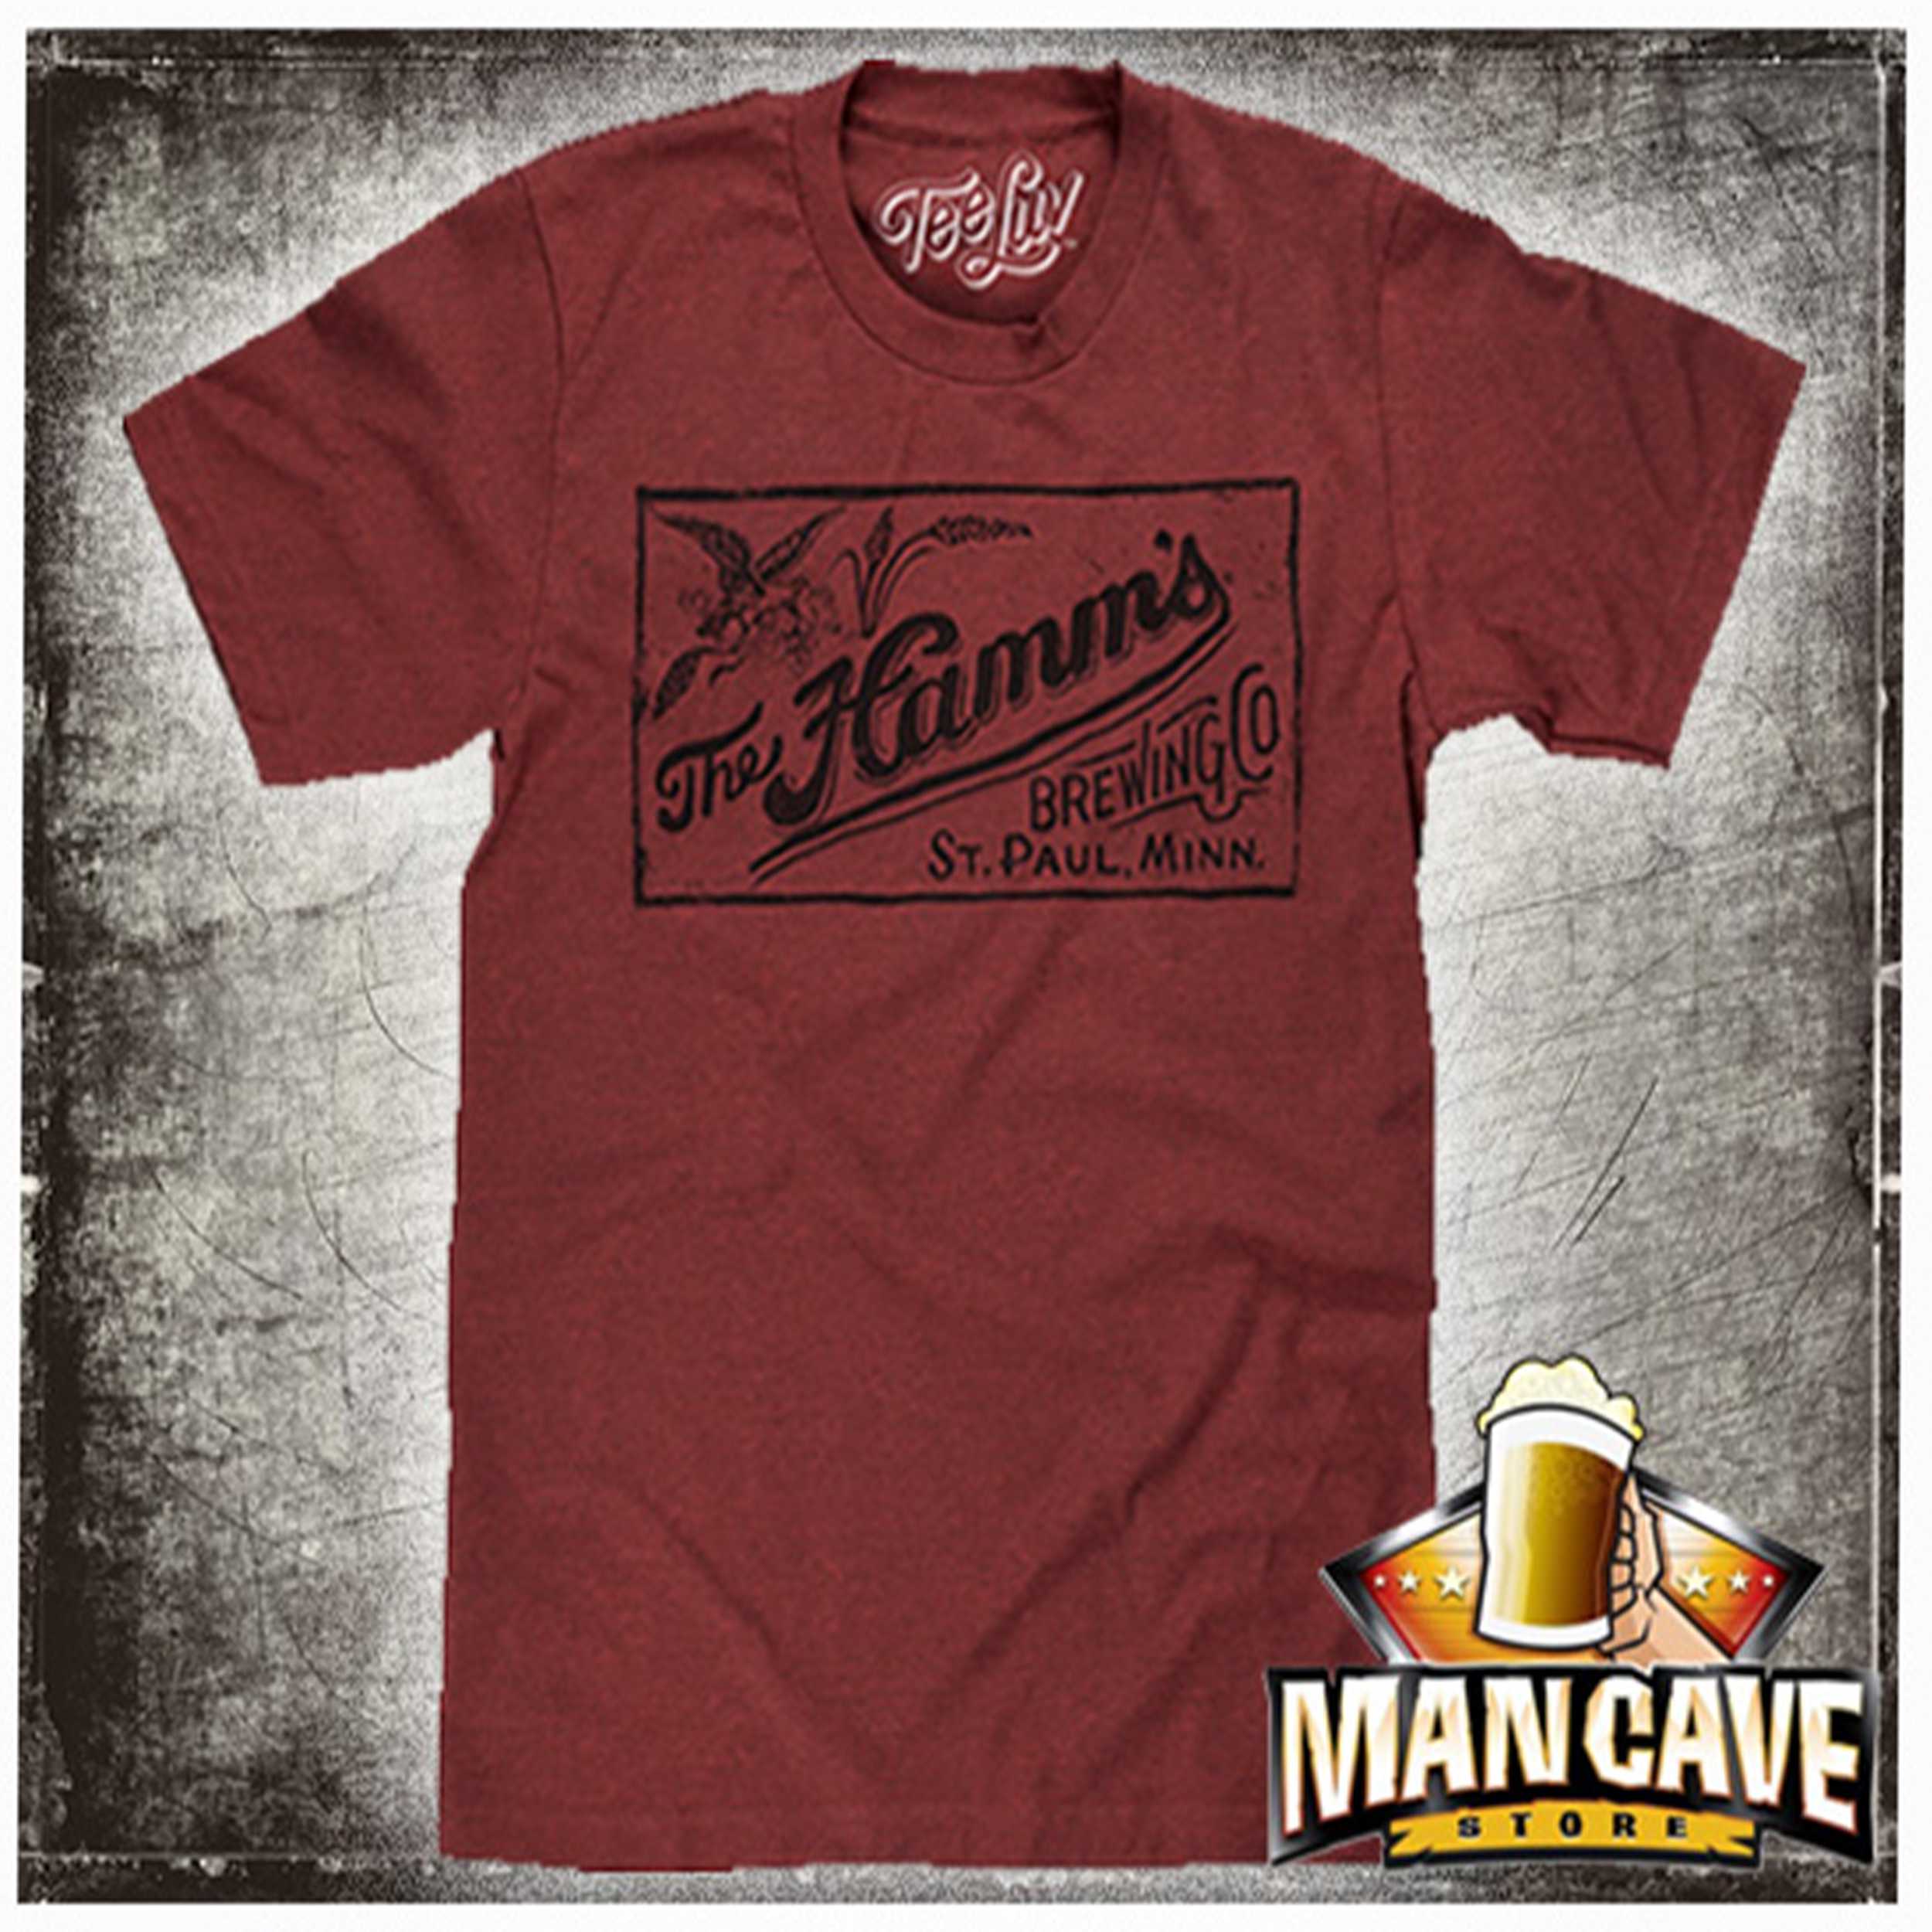 The Hamms Beer on Brick Black T-shirt